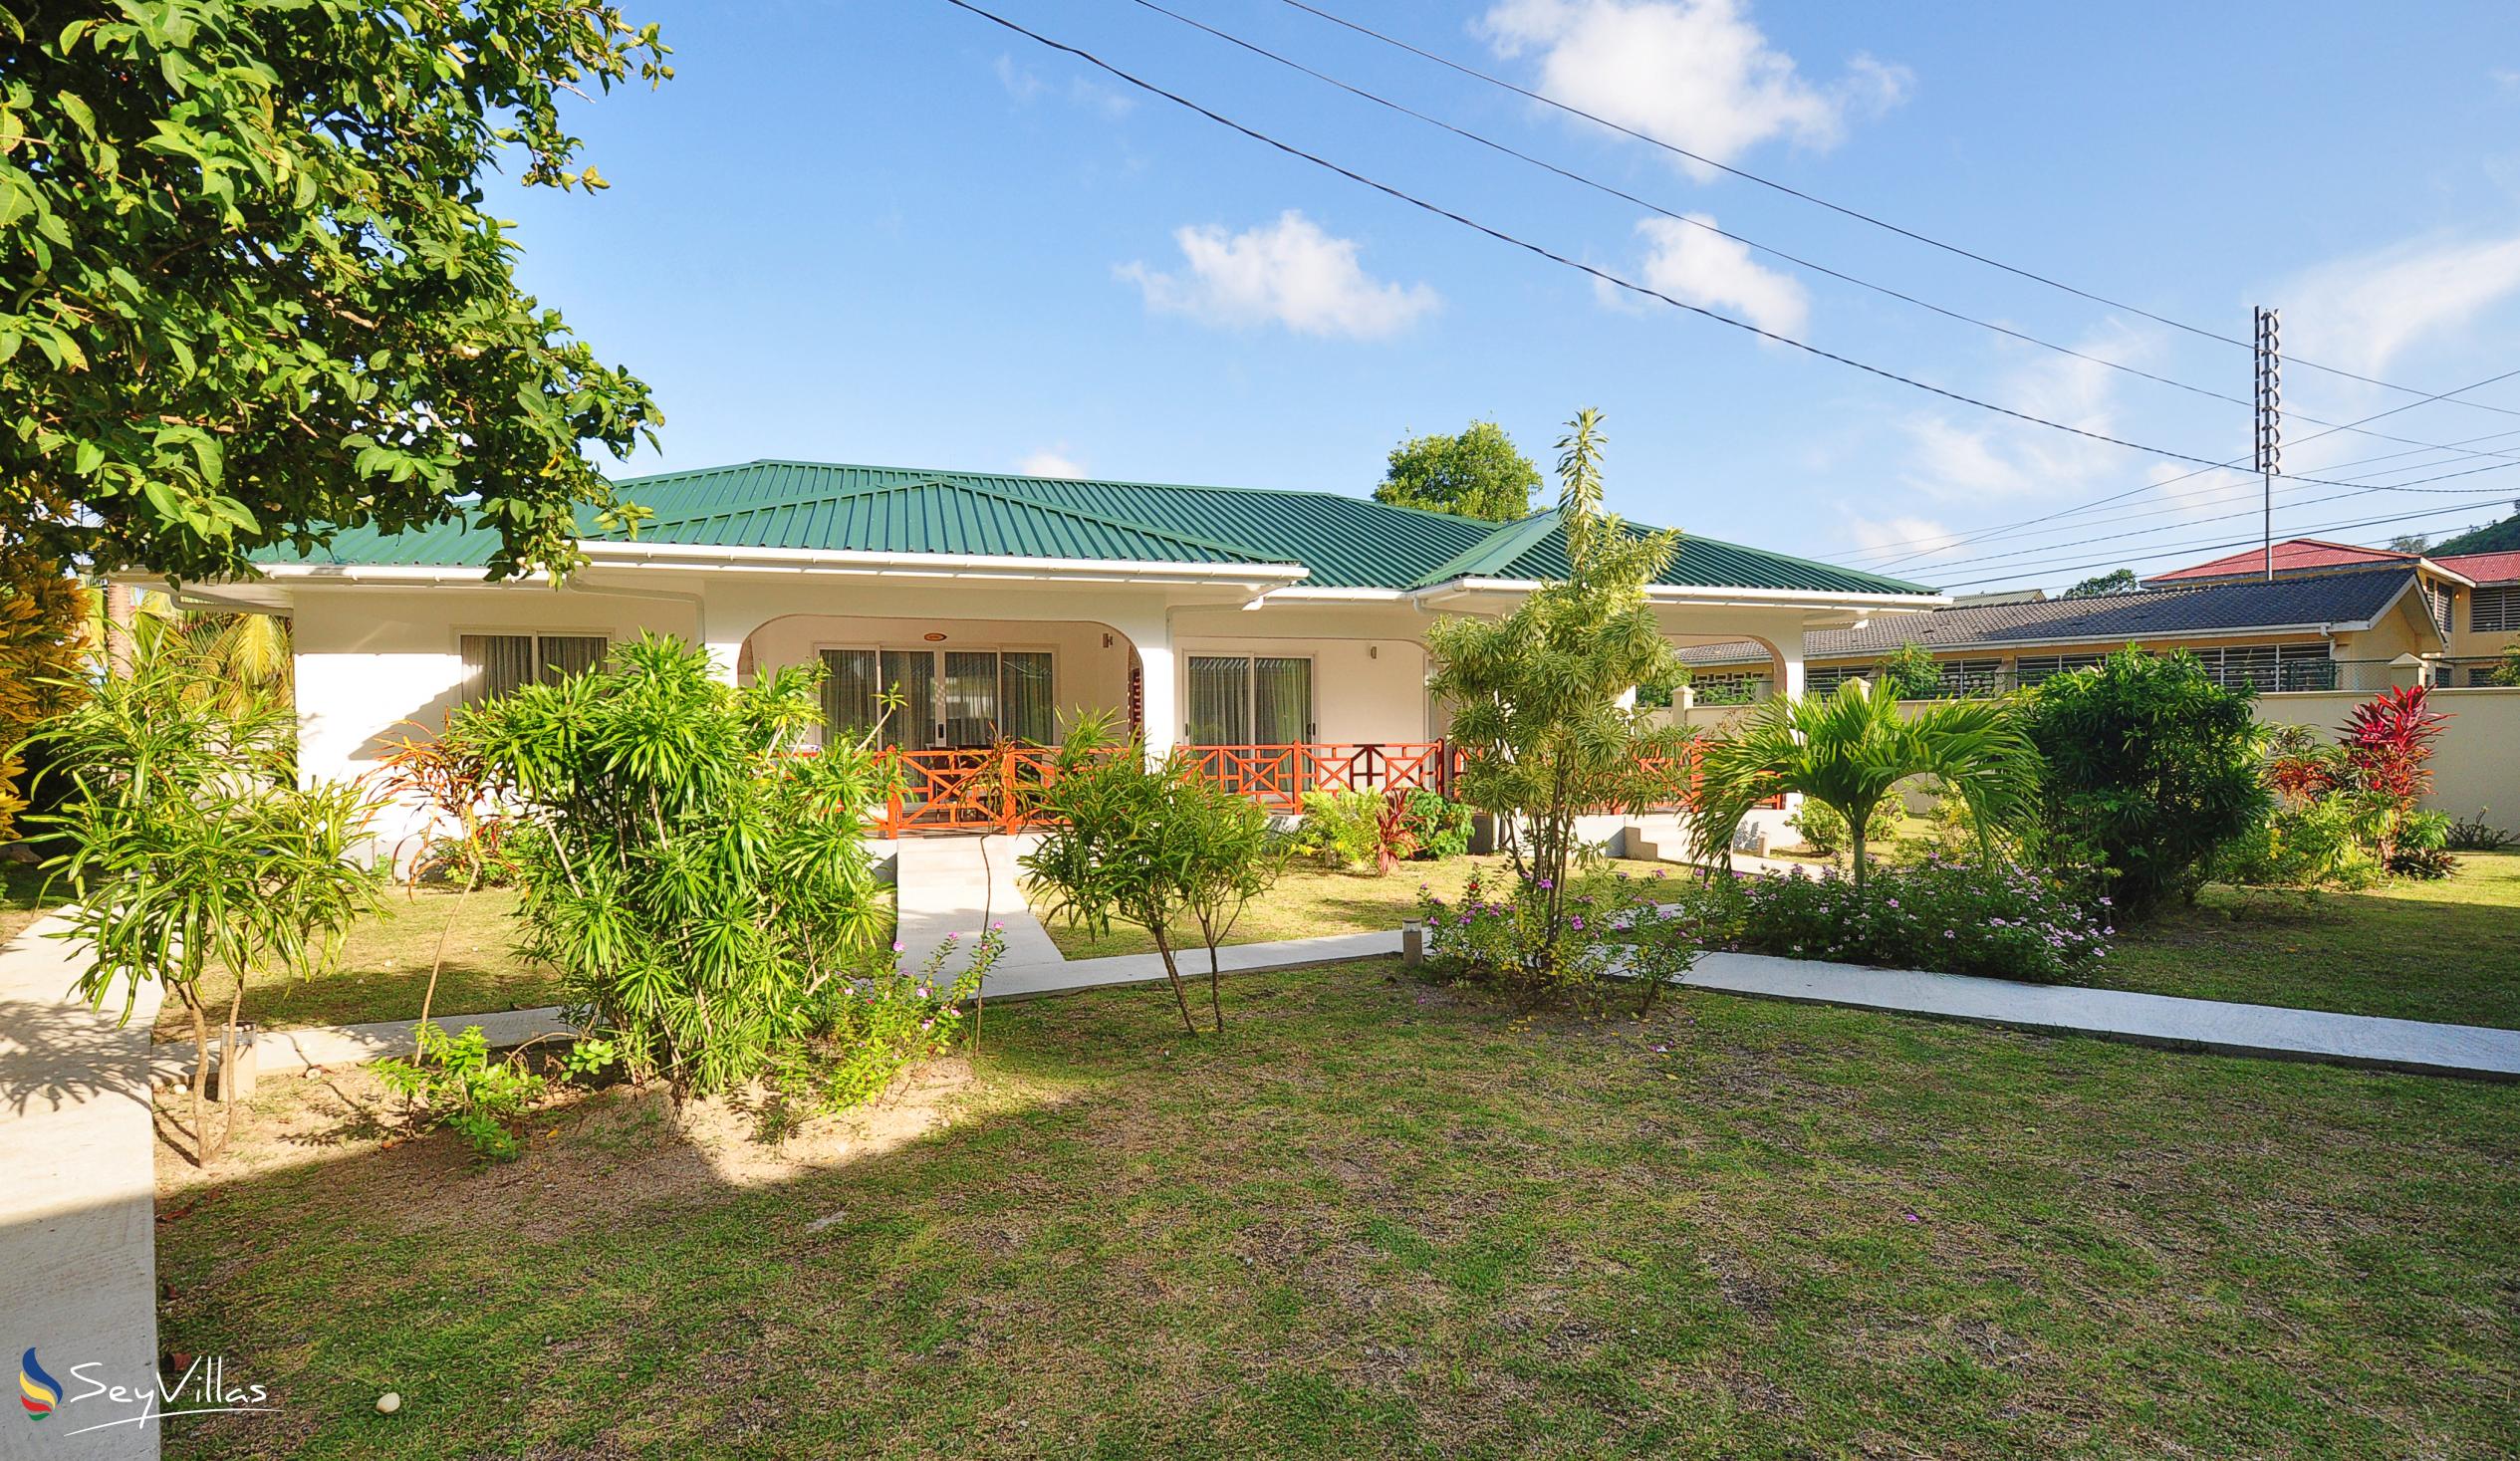 Foto 13: Coco Blanche - Villa mit Gartenblick - Mahé (Seychellen)